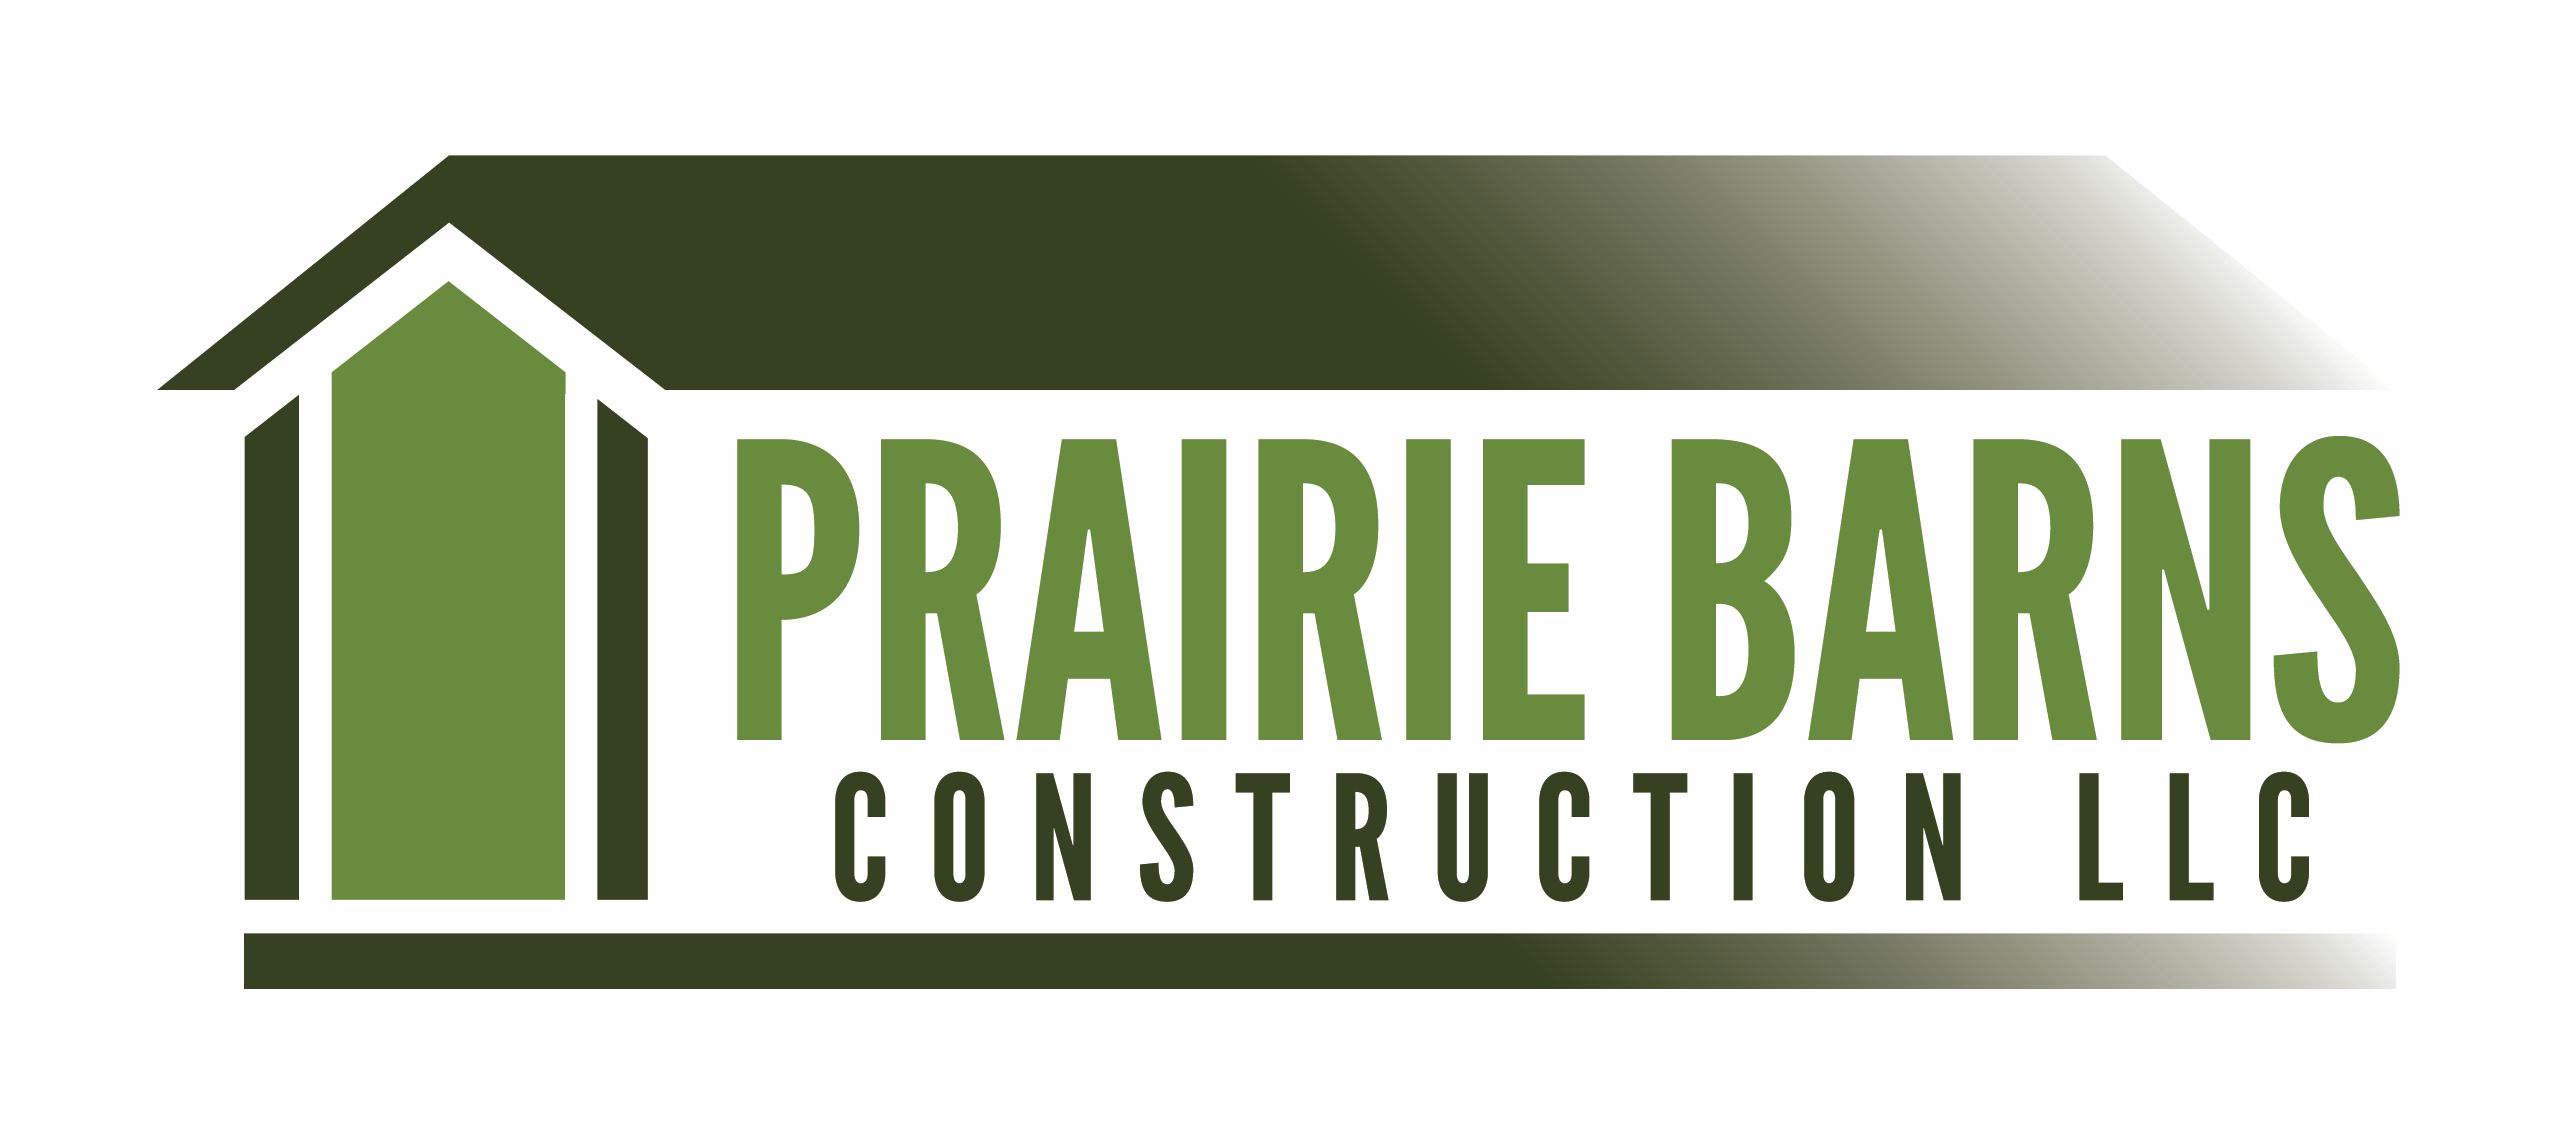 Prairie Construction